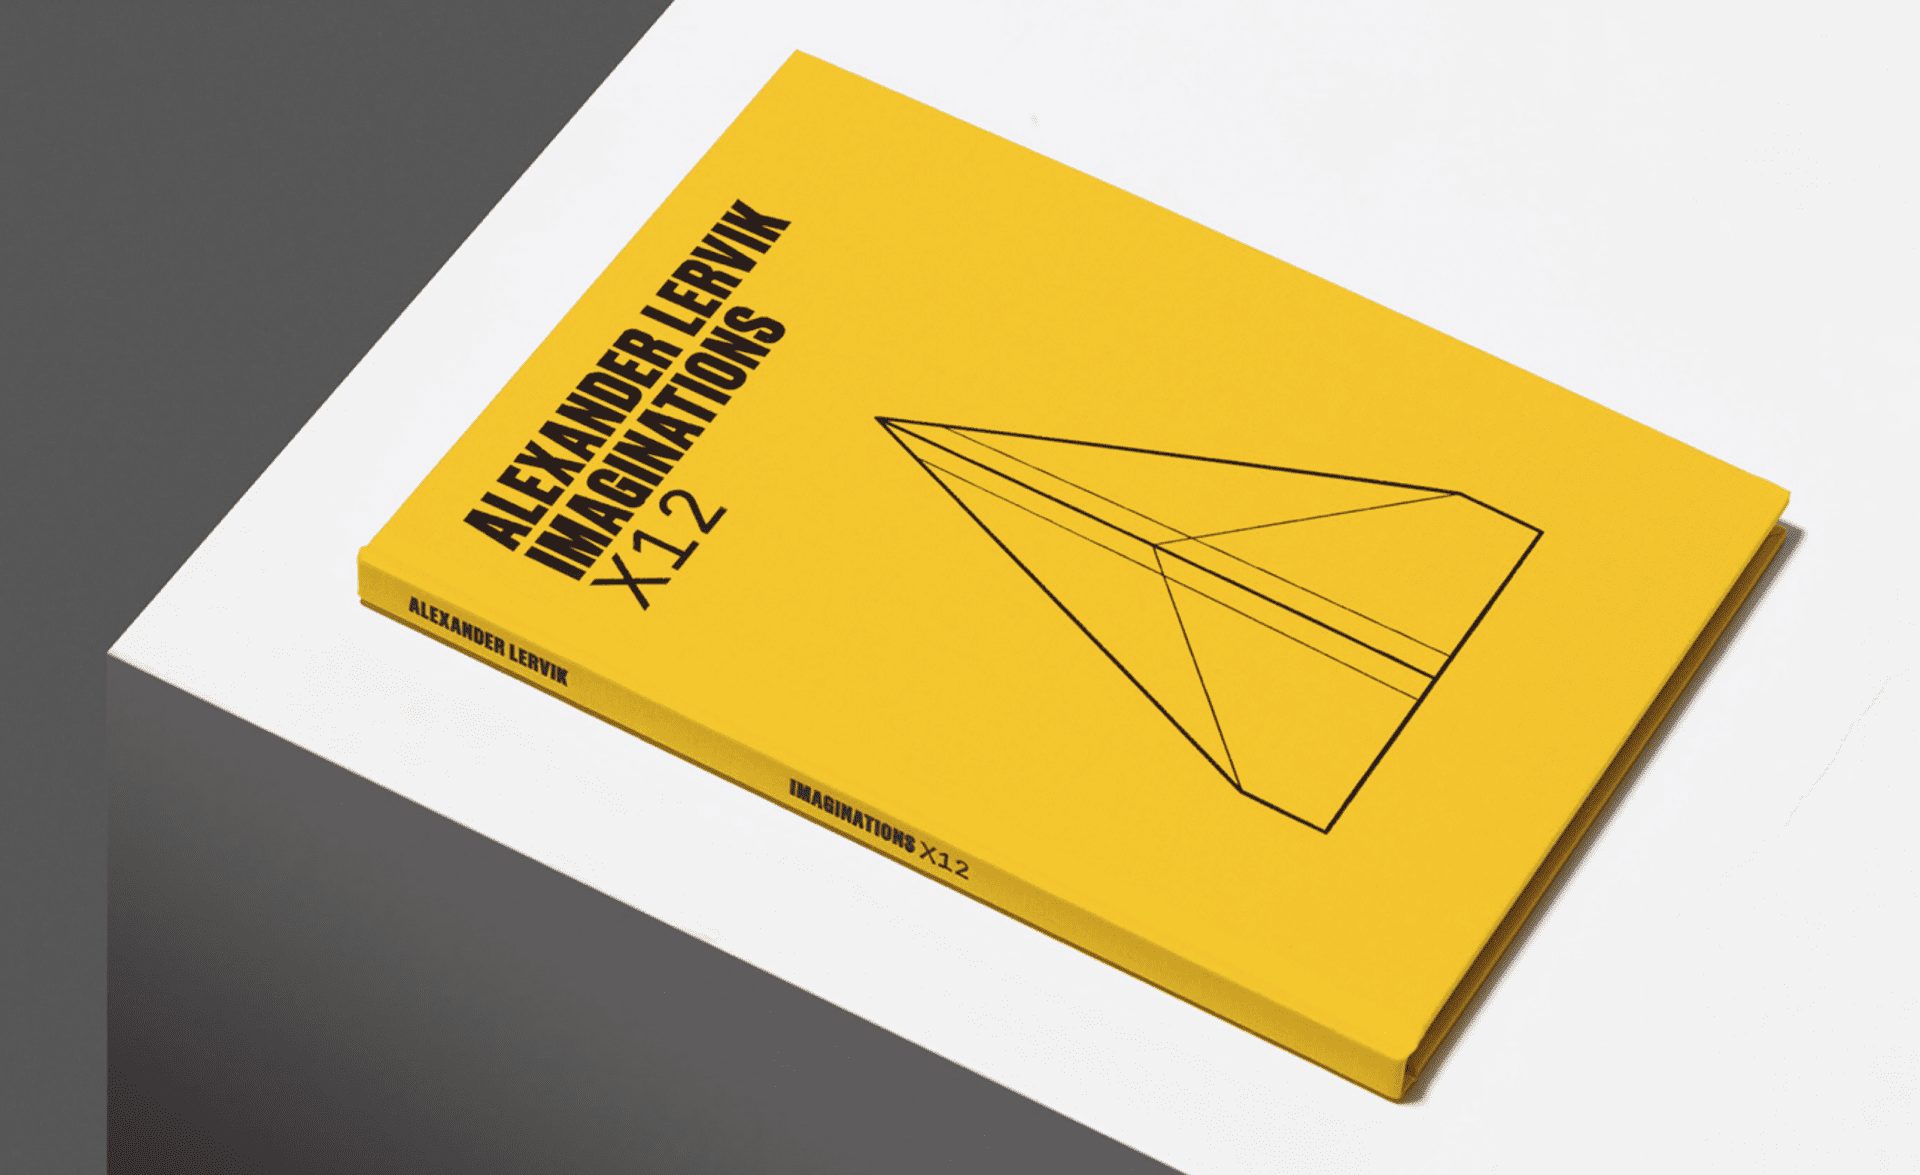 Stockholm Design Week 2020, Alexander Lervik, Imaginations x12, Aritco, OnOffice magazine